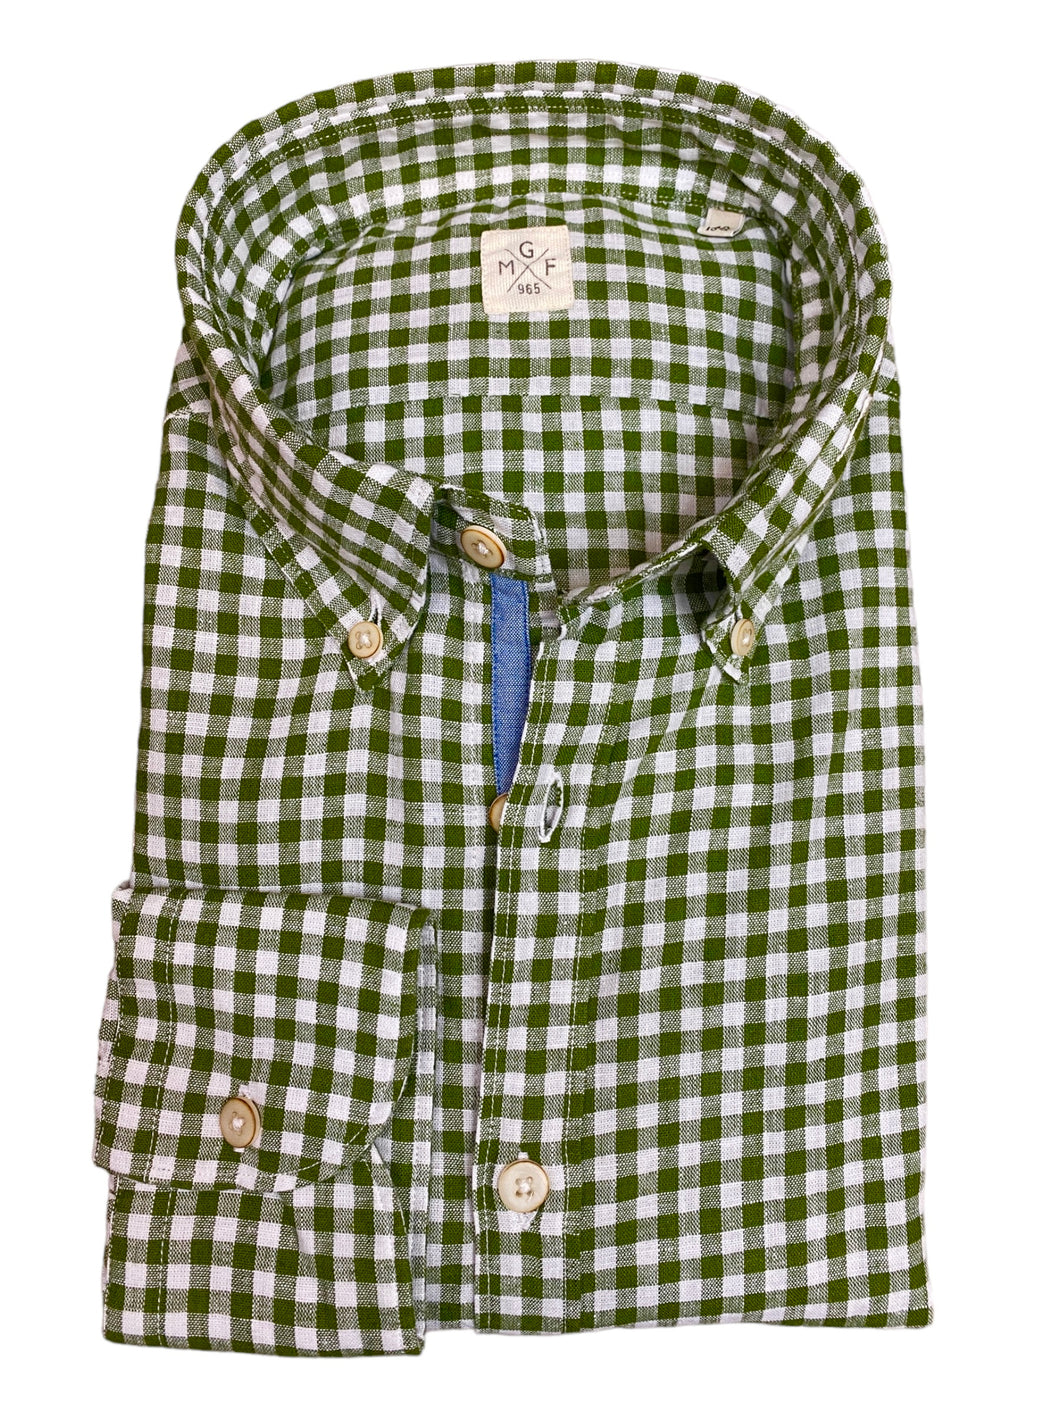 GMF 965 Linen/Cotton Gingham Shirt Green